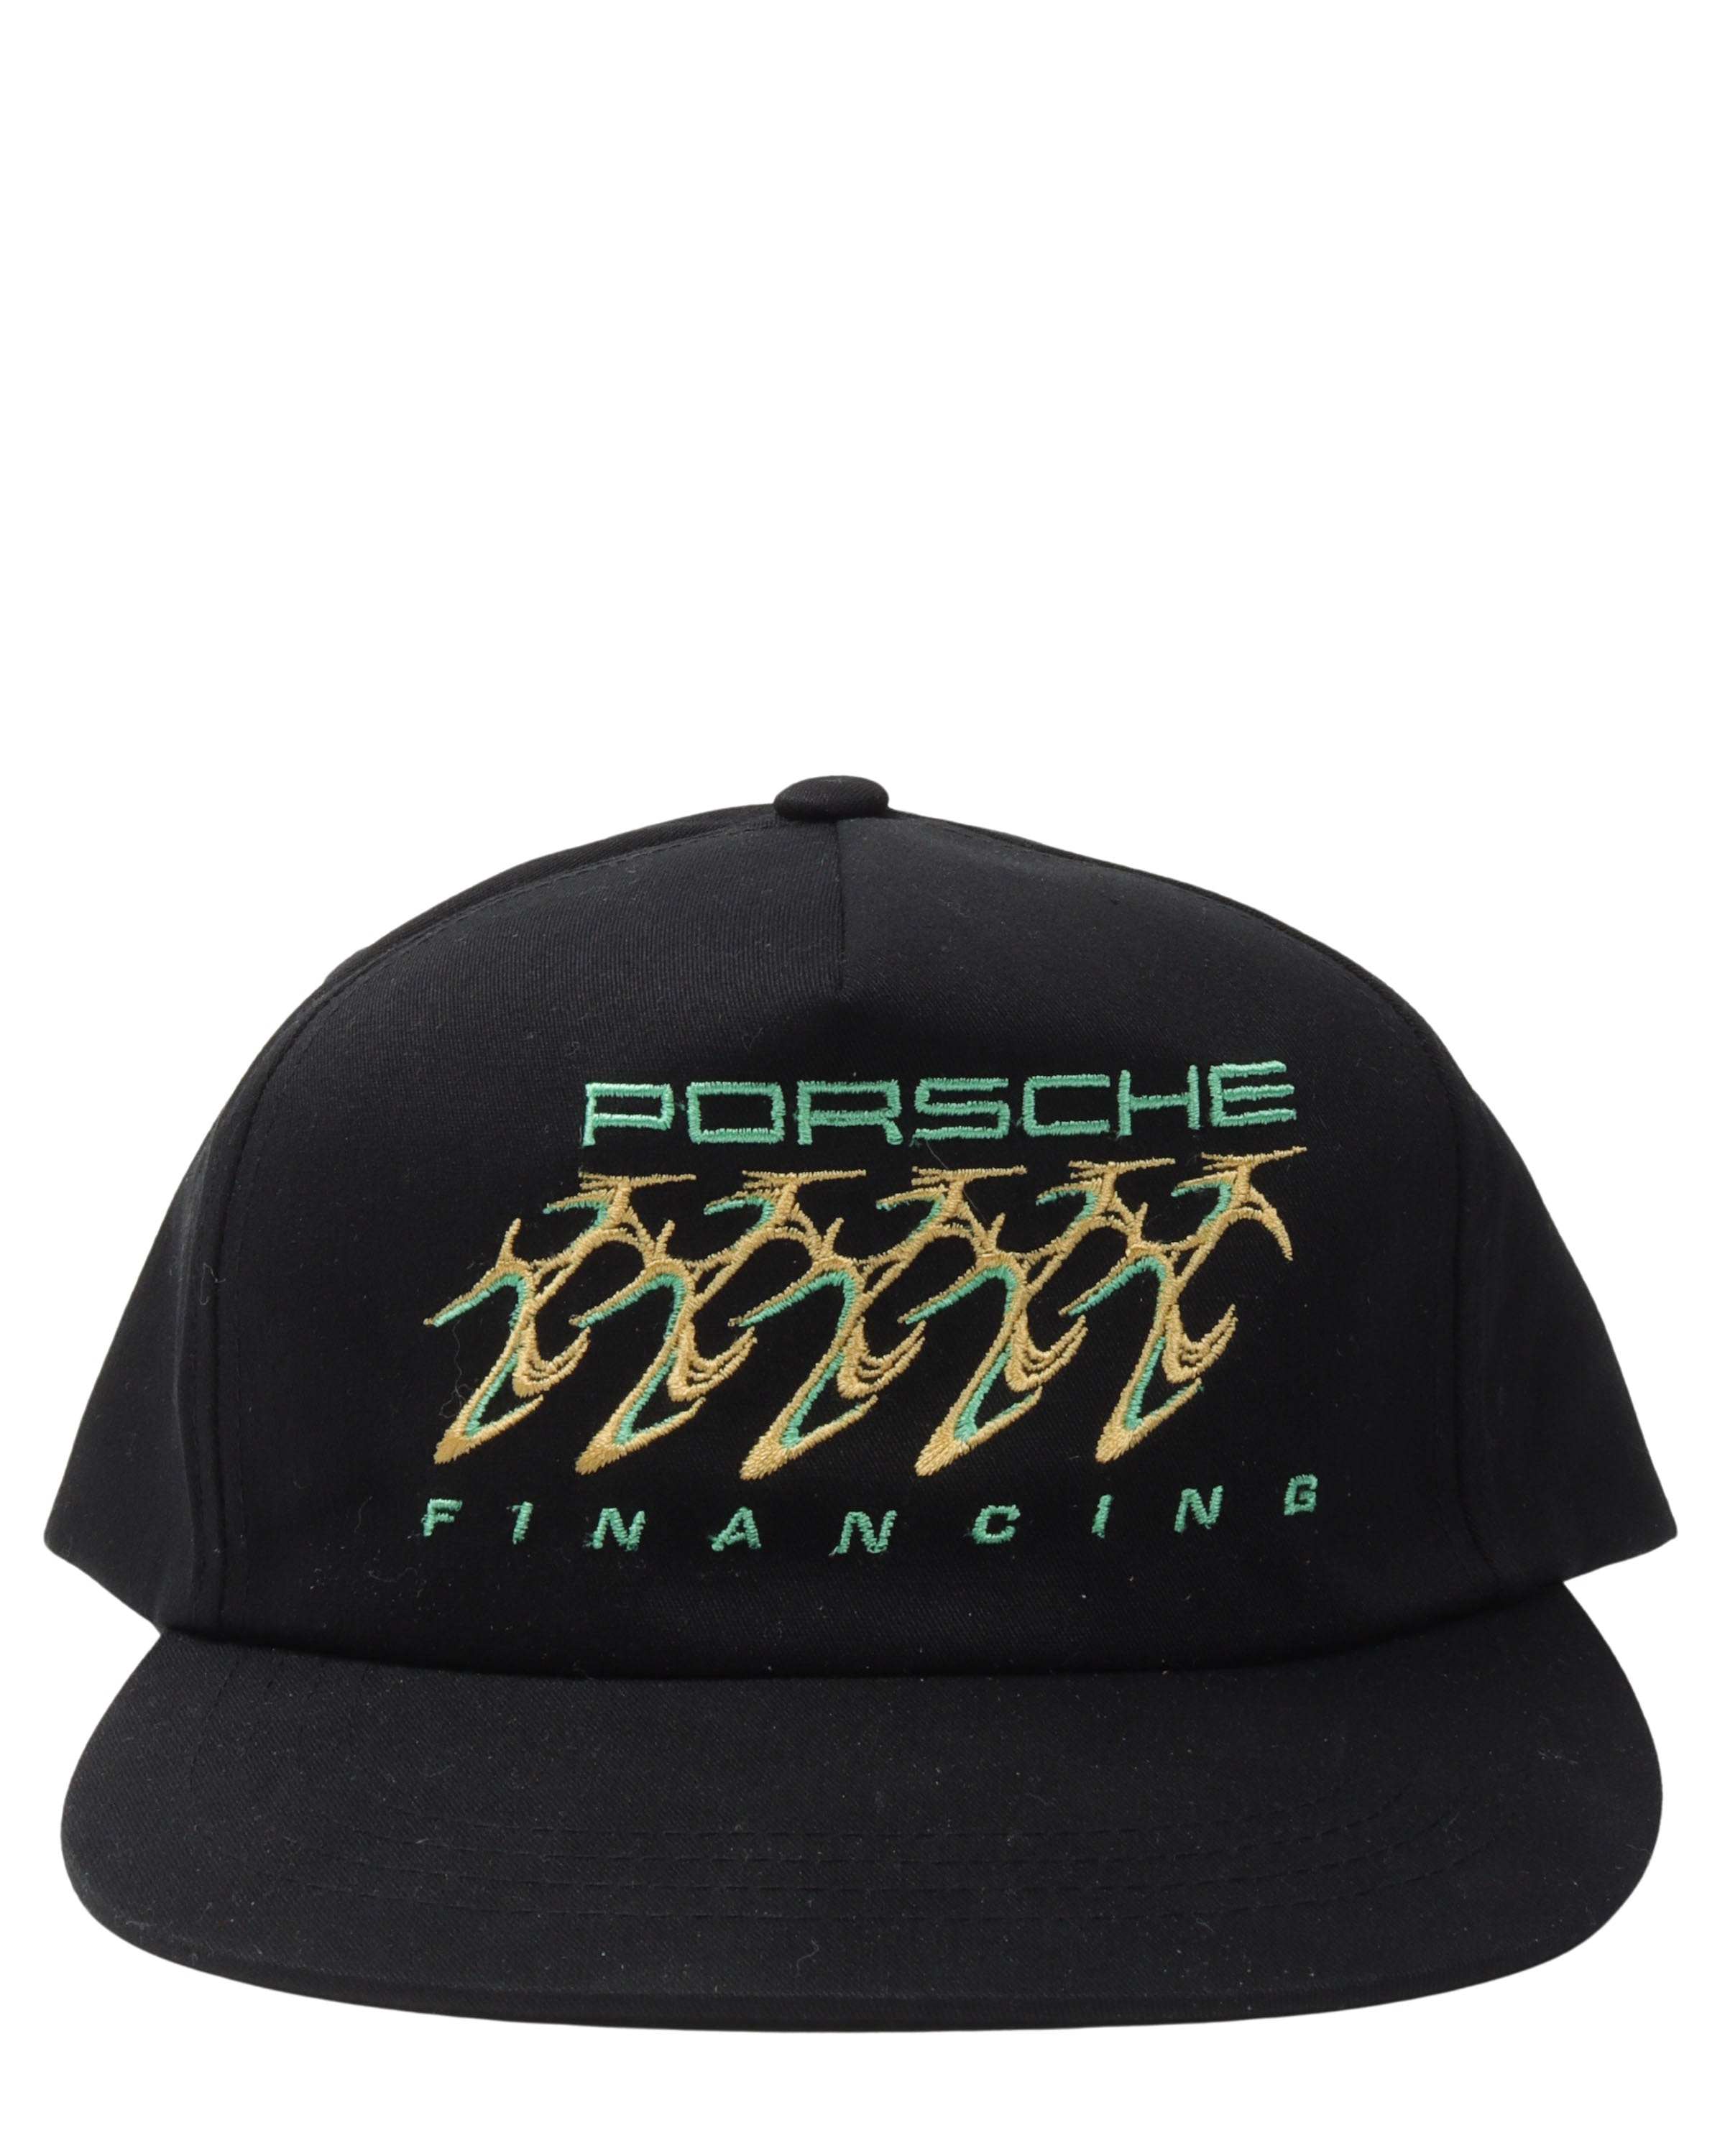 Porsche Financing Hat